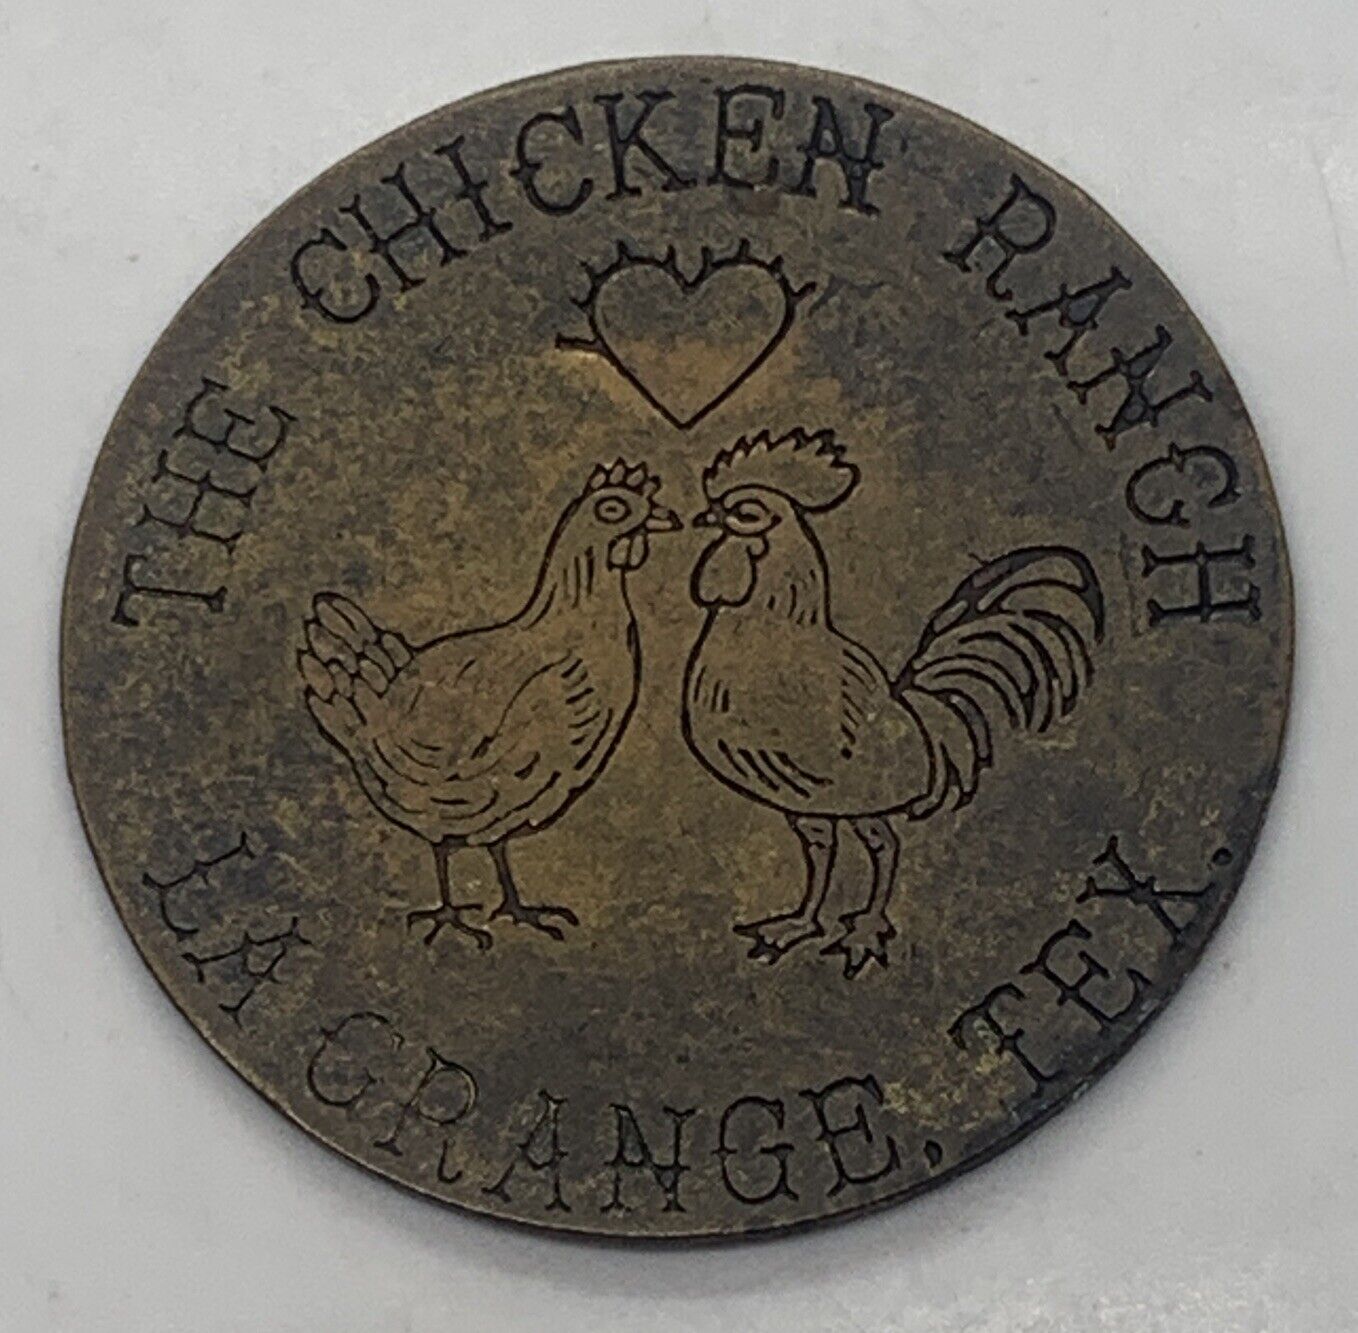 The Chicken Ranch La Grange Texas - Good For All Night Brothel Token 1905-1973